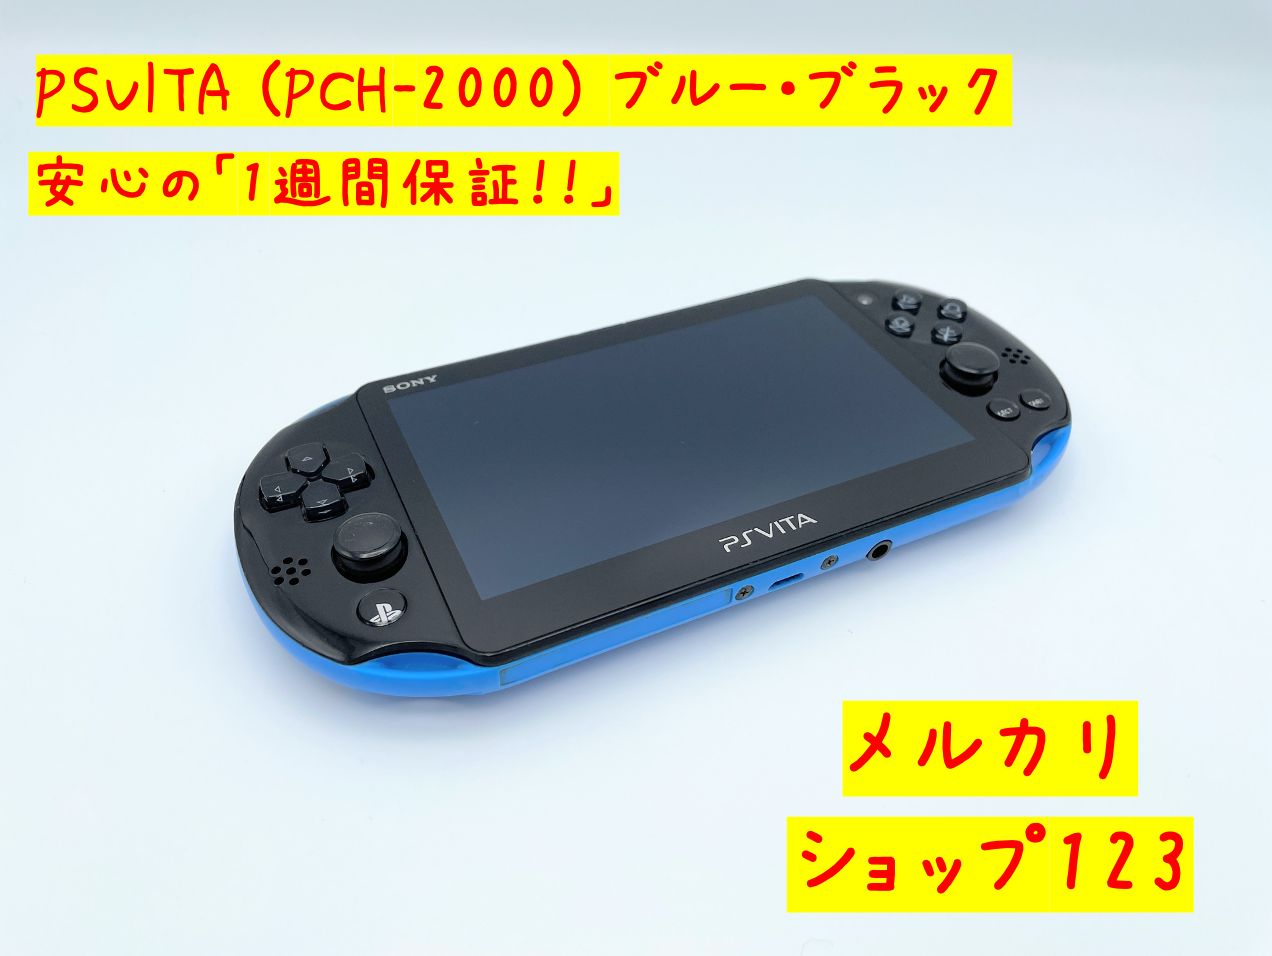 PSVITA 本体 Wi-Fiモデル ブルー・ブラック (PCH-2000) - メルカリ